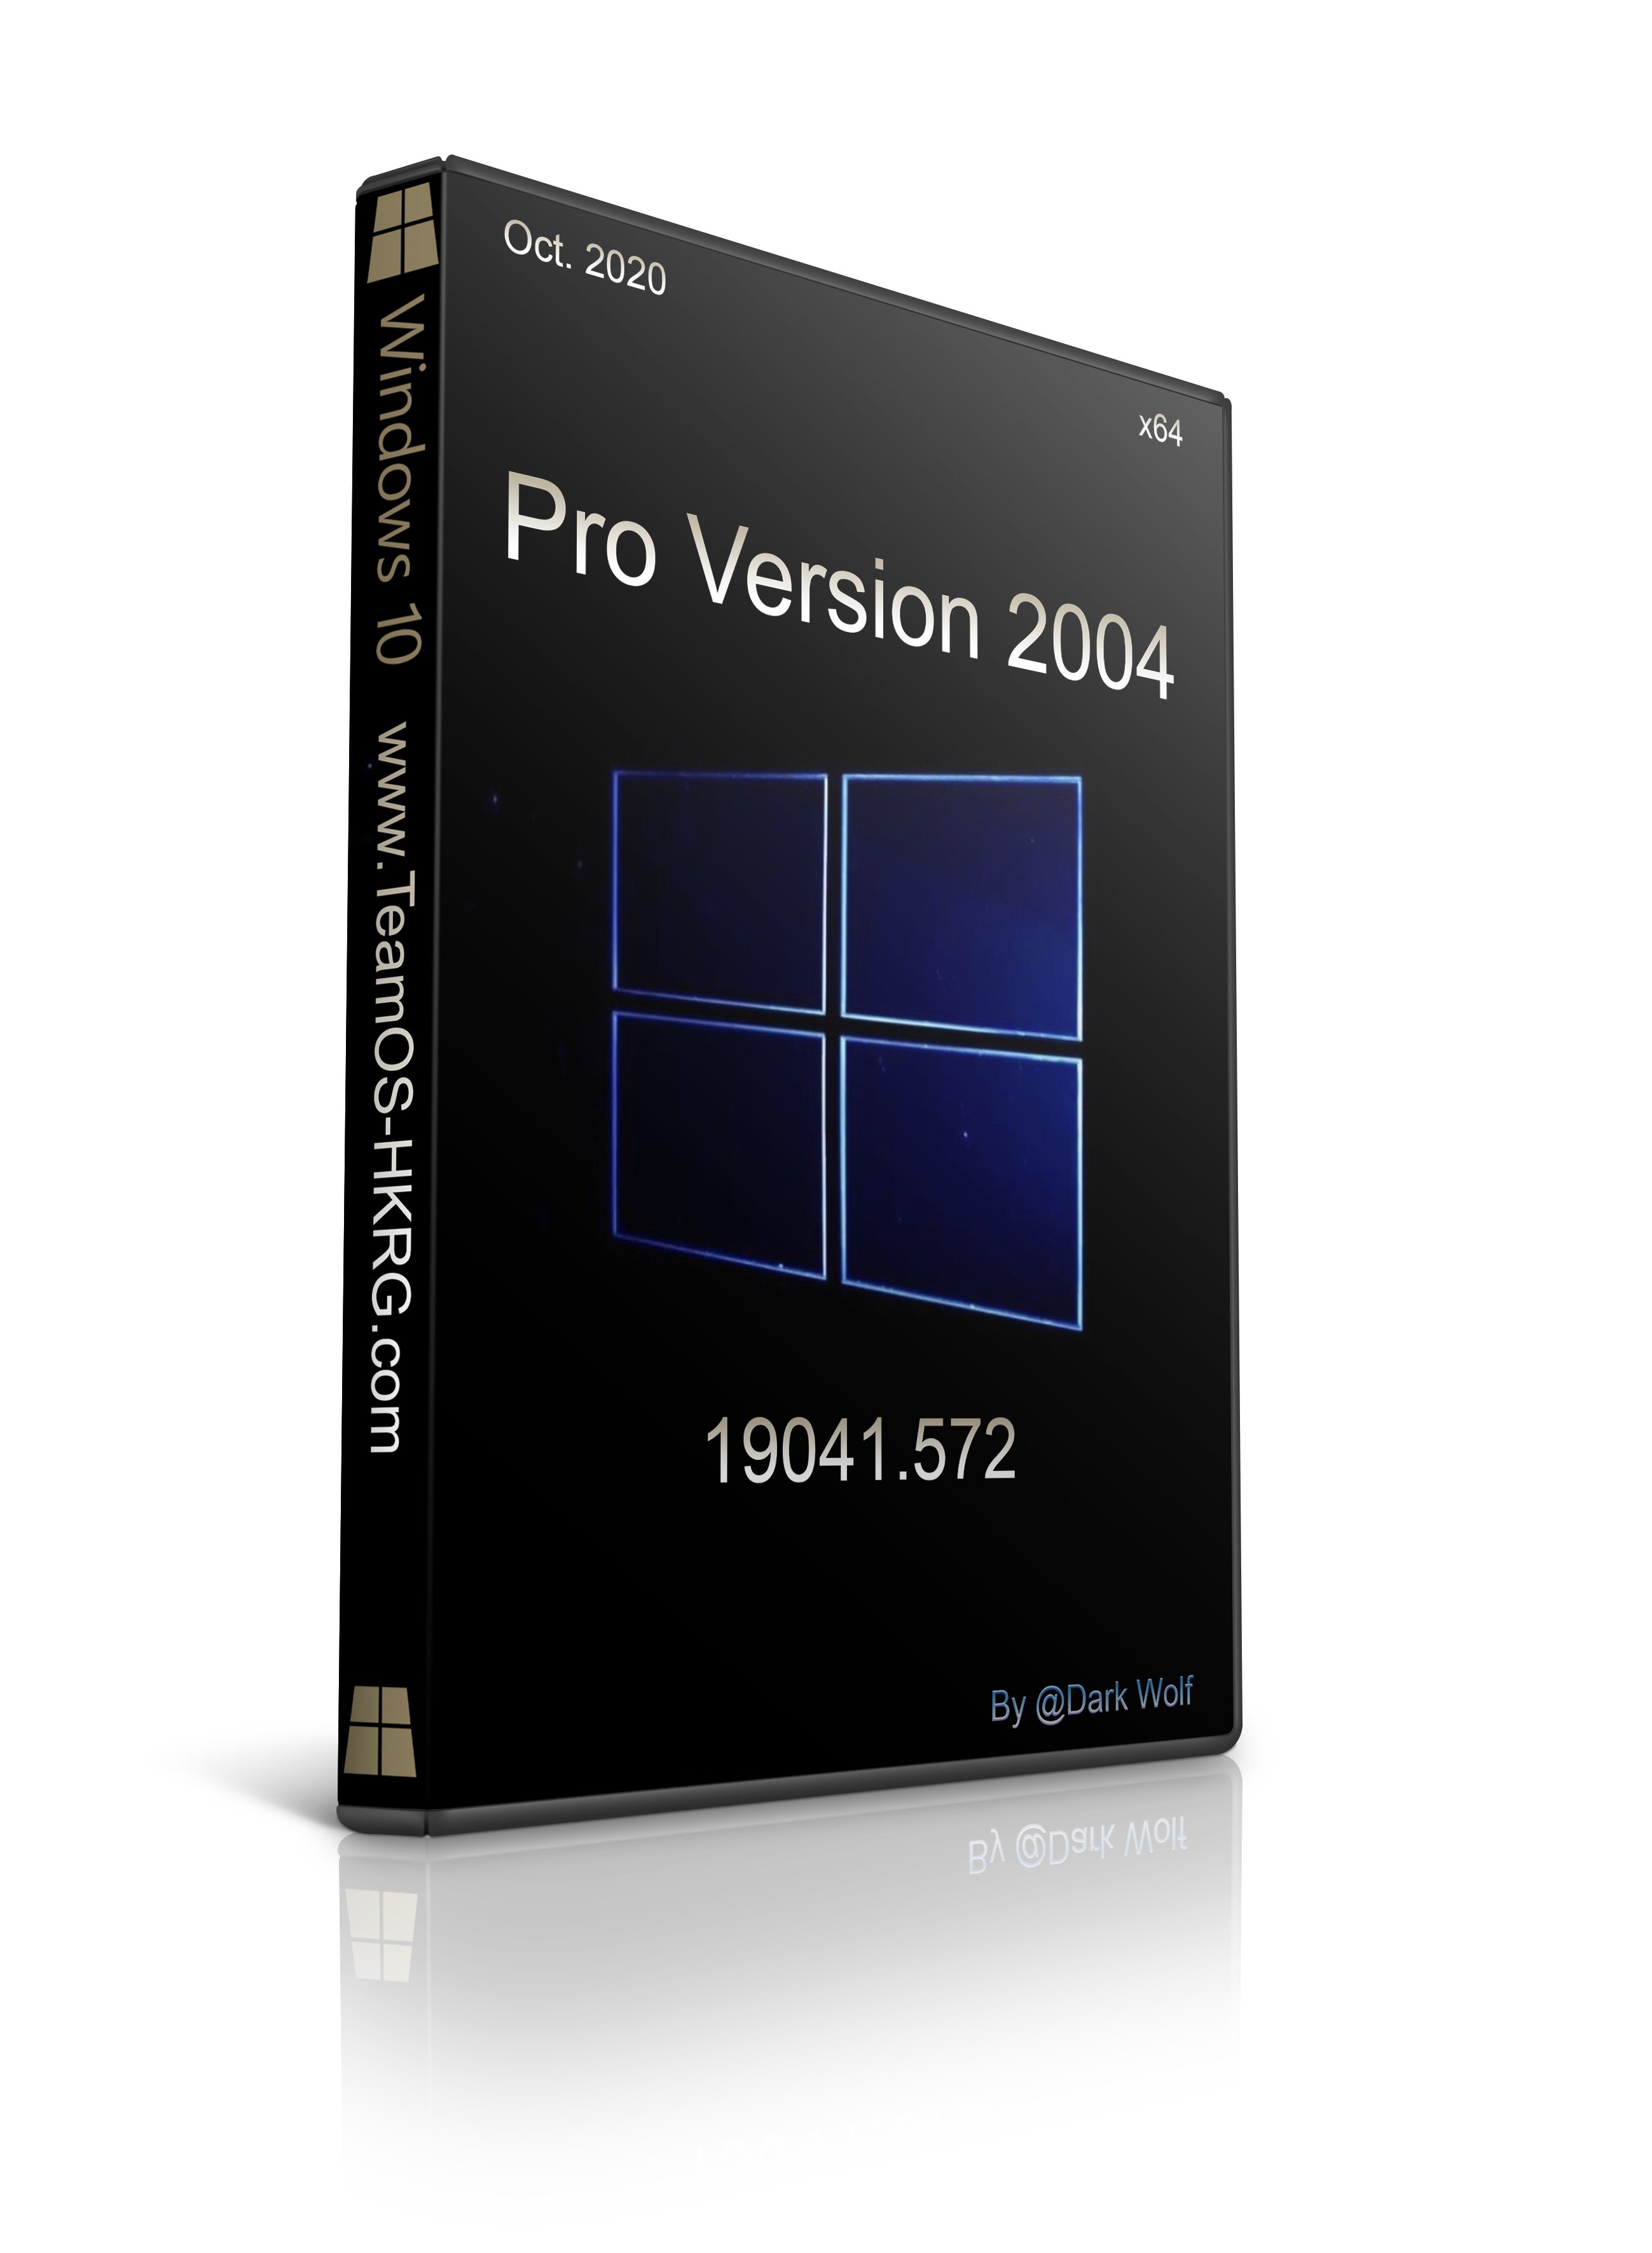 windows 10 pro version 2004 download